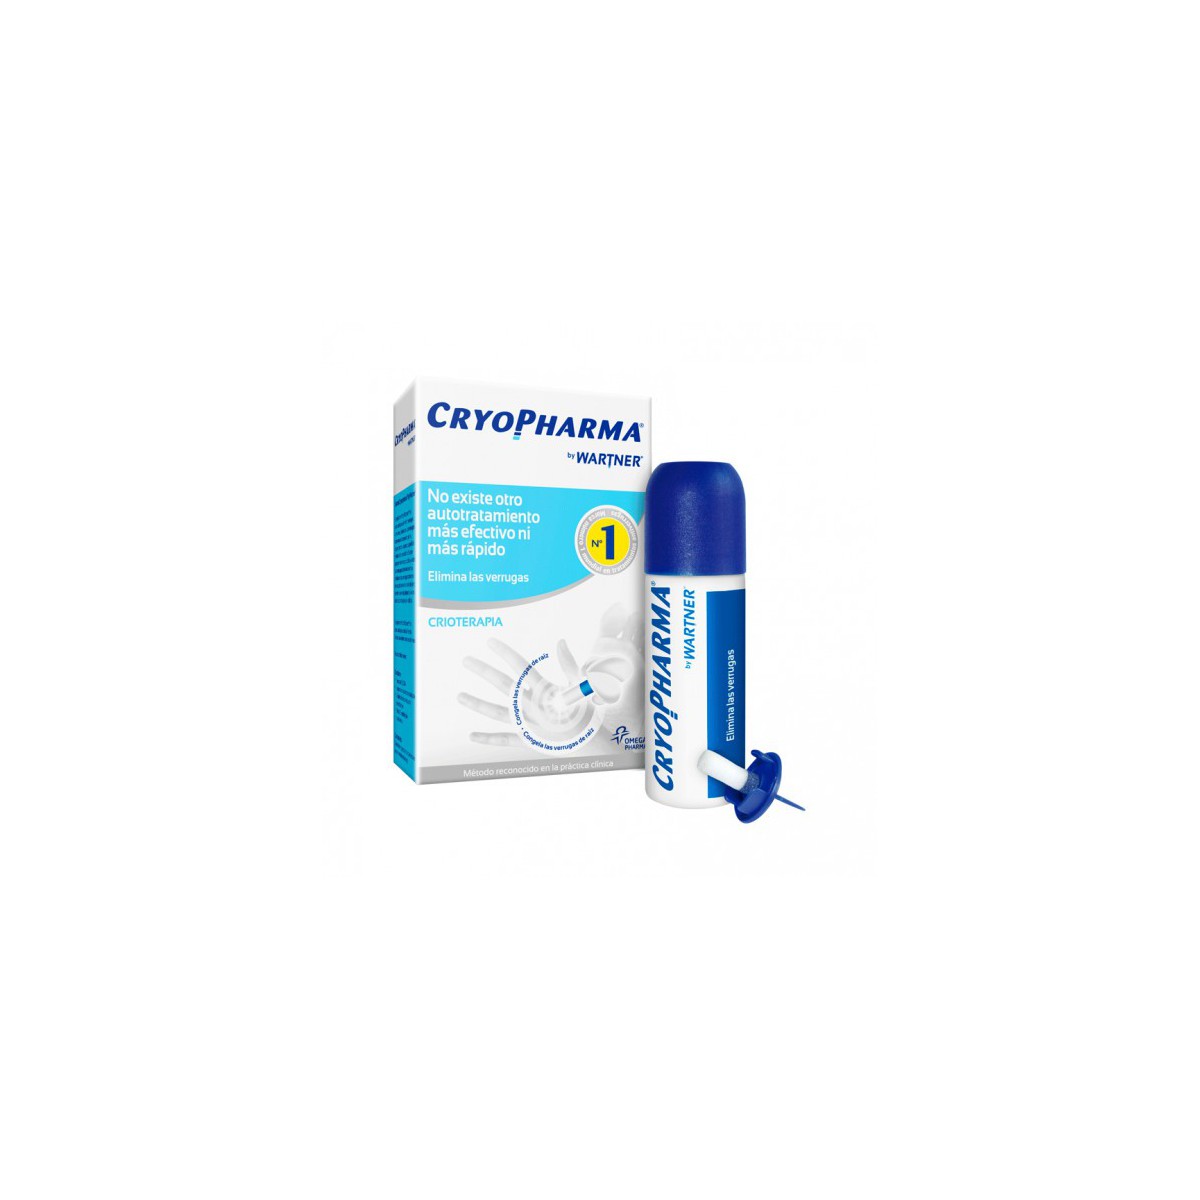 Cryopharma 50 ml 2 generación